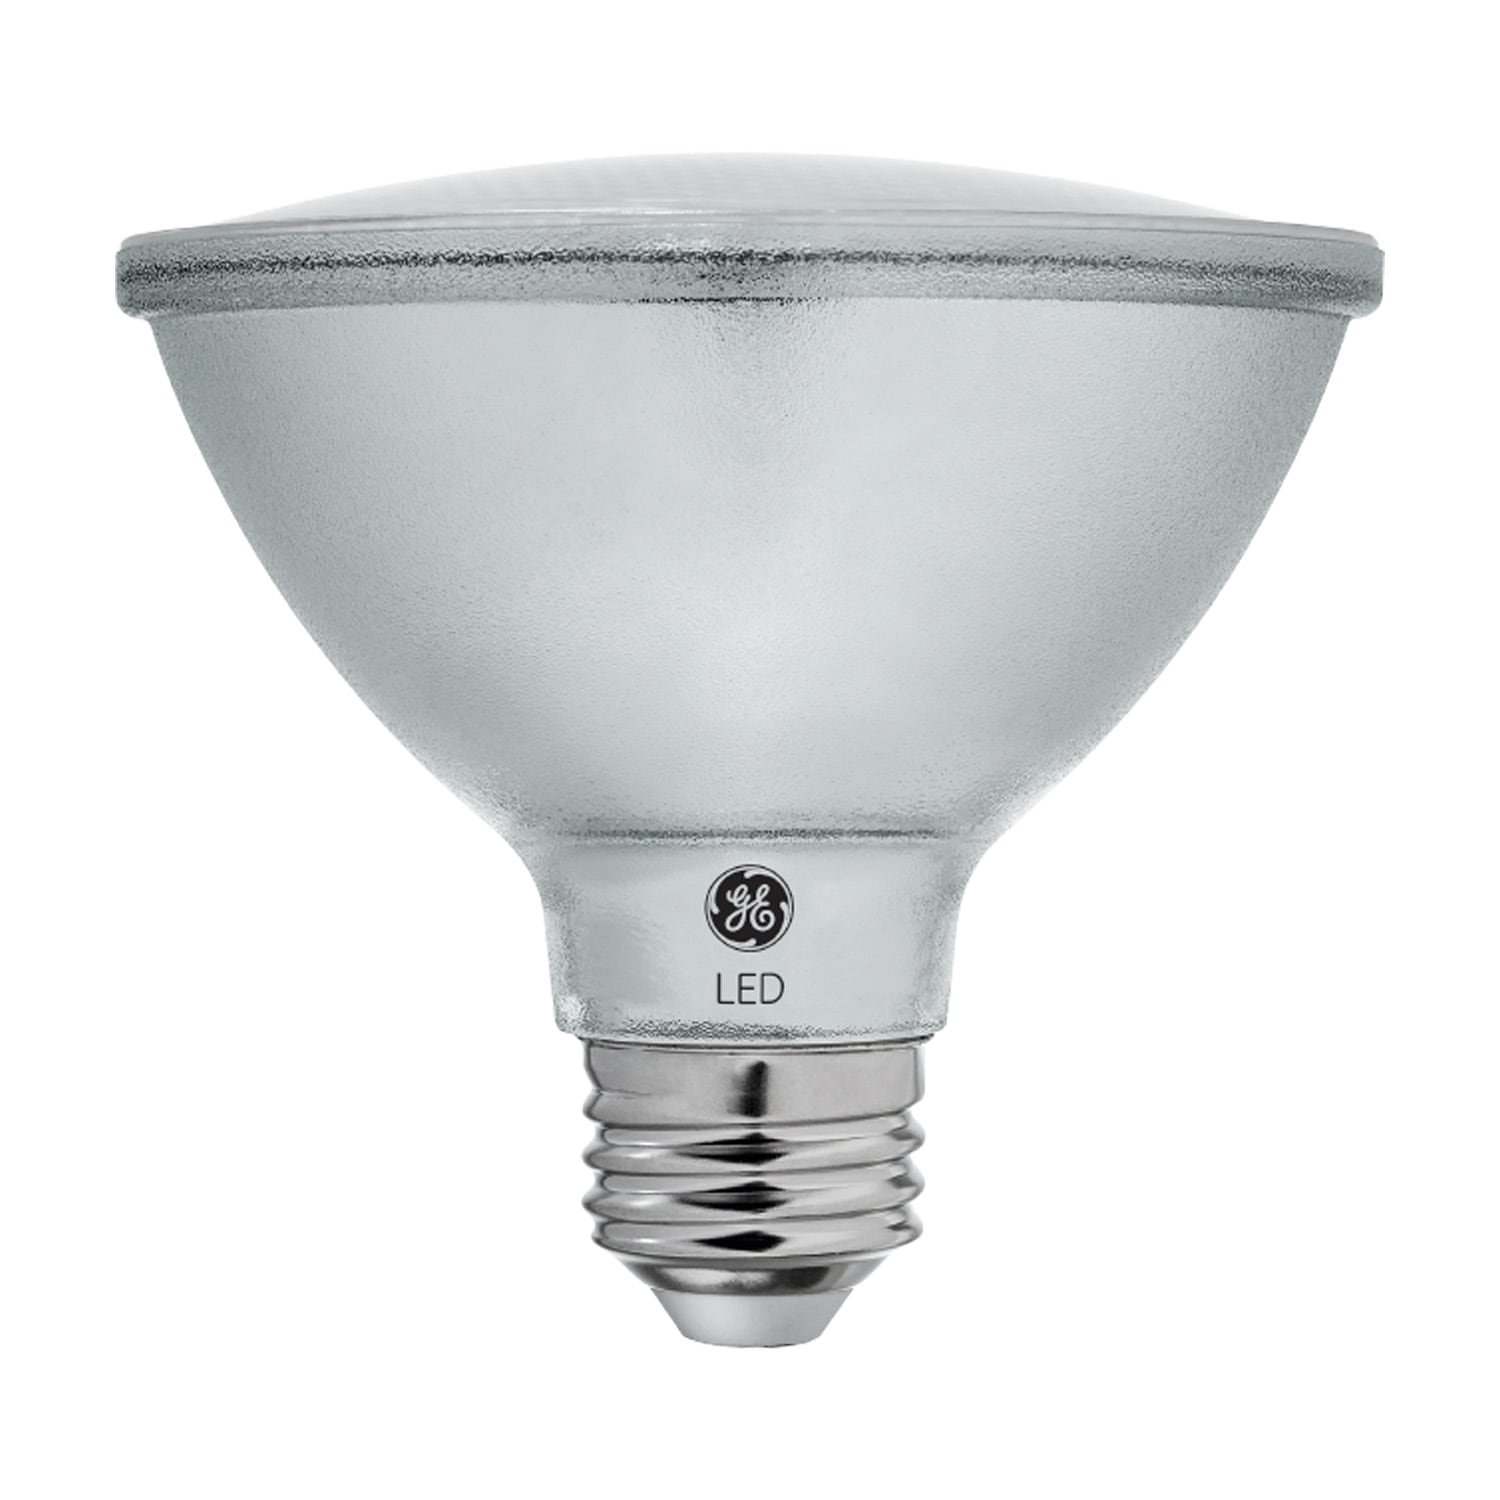 GE Classic 90-Watt LED White Medium Base Dimmable Flood Light Bulb (4-Pack) at Lowes.com